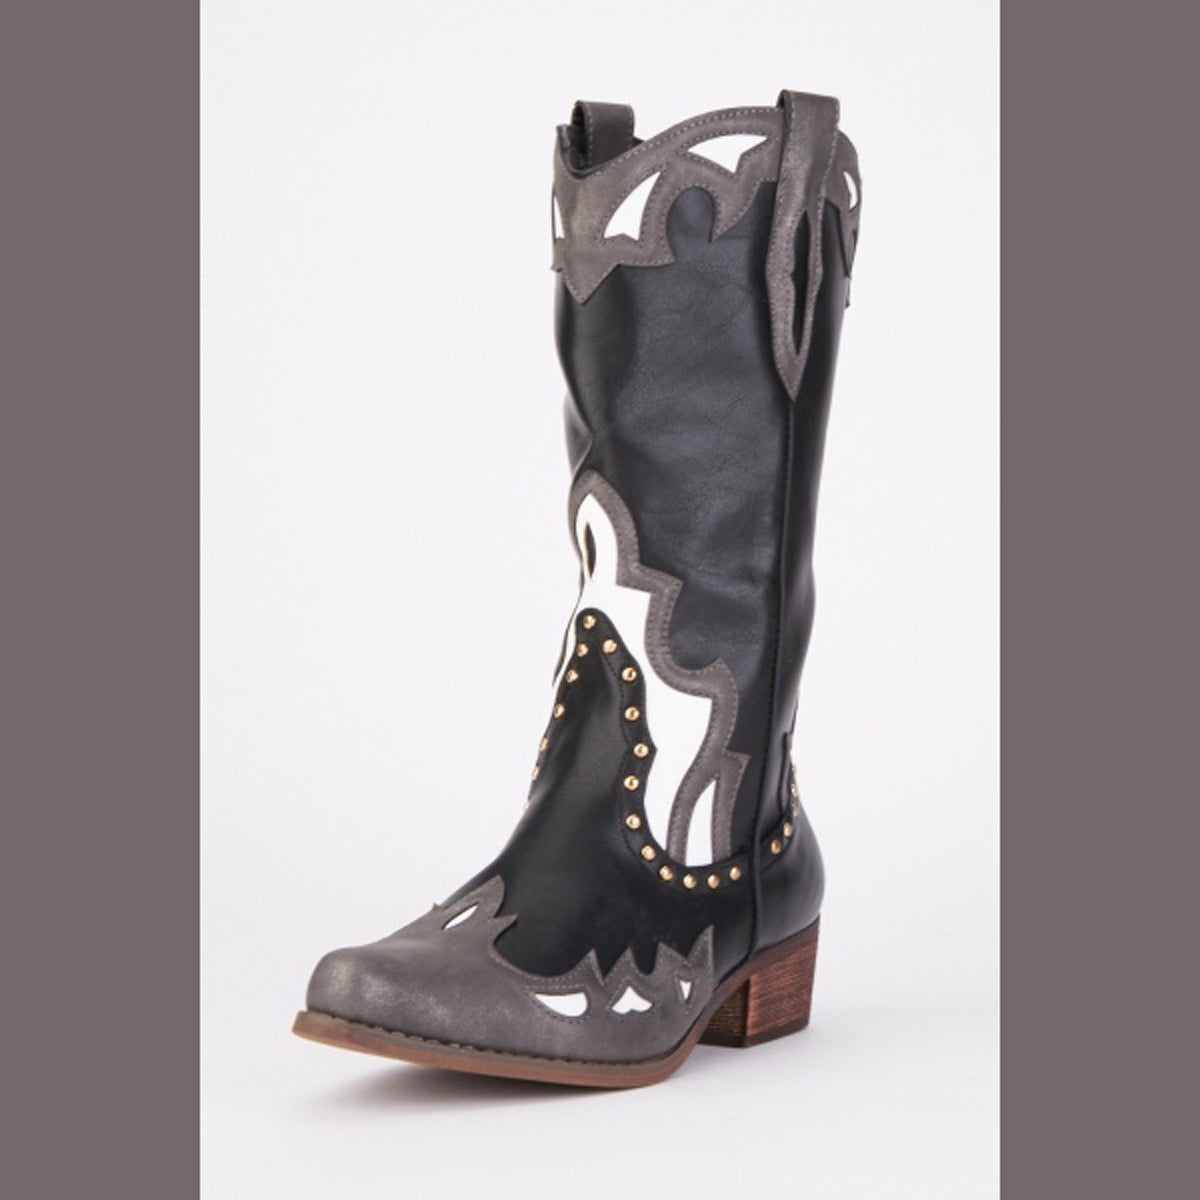 ROCKTHOSECURVES Black Grey Cowboy / Western Boots Flat Heel Upper Calf Length